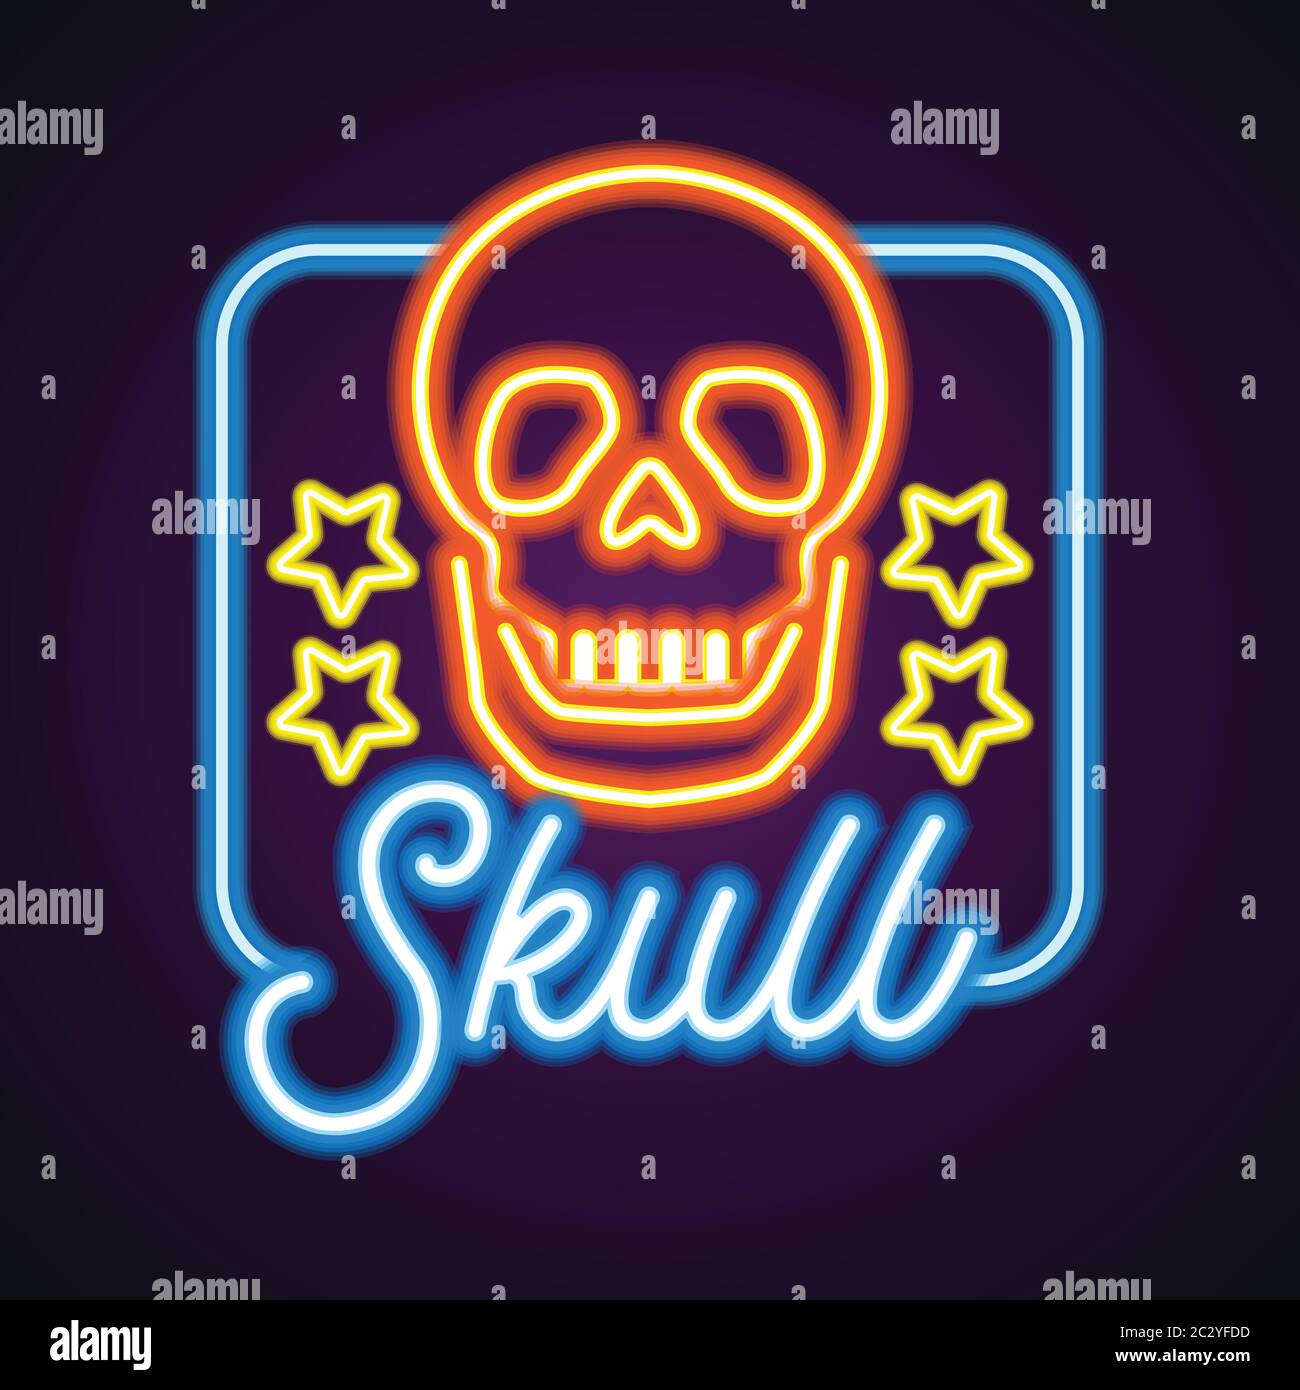 skull logo with neon sign effect. vector illustration Stock Vector